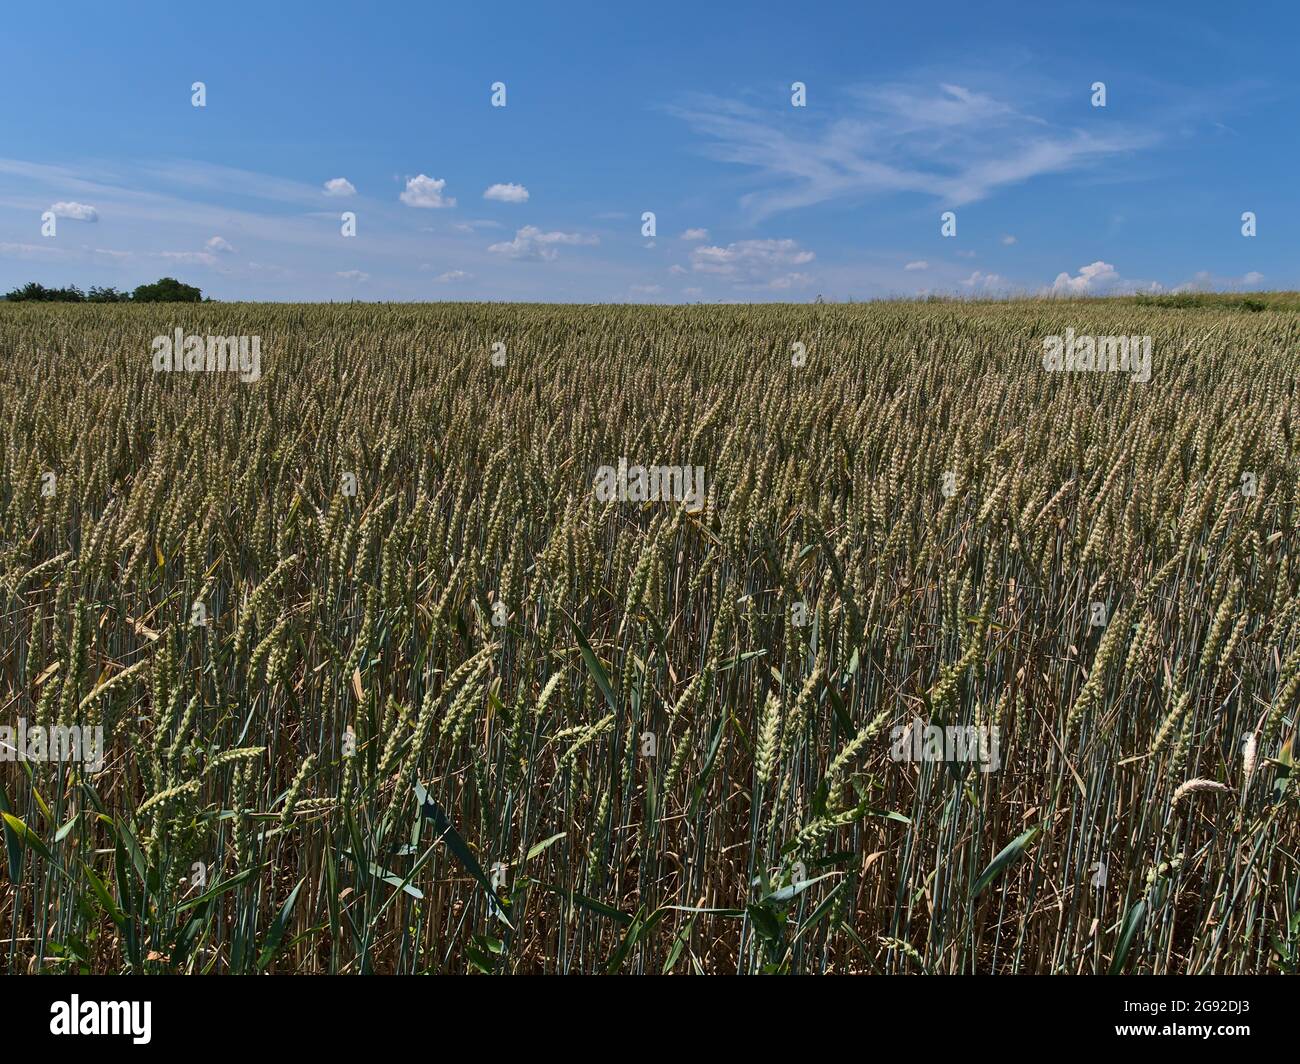 View over agricultural grain field with green and golden wheat plants (triticum aestivum) in summer season near Abstatt, Baden-Württemberg, Germany. Stock Photo